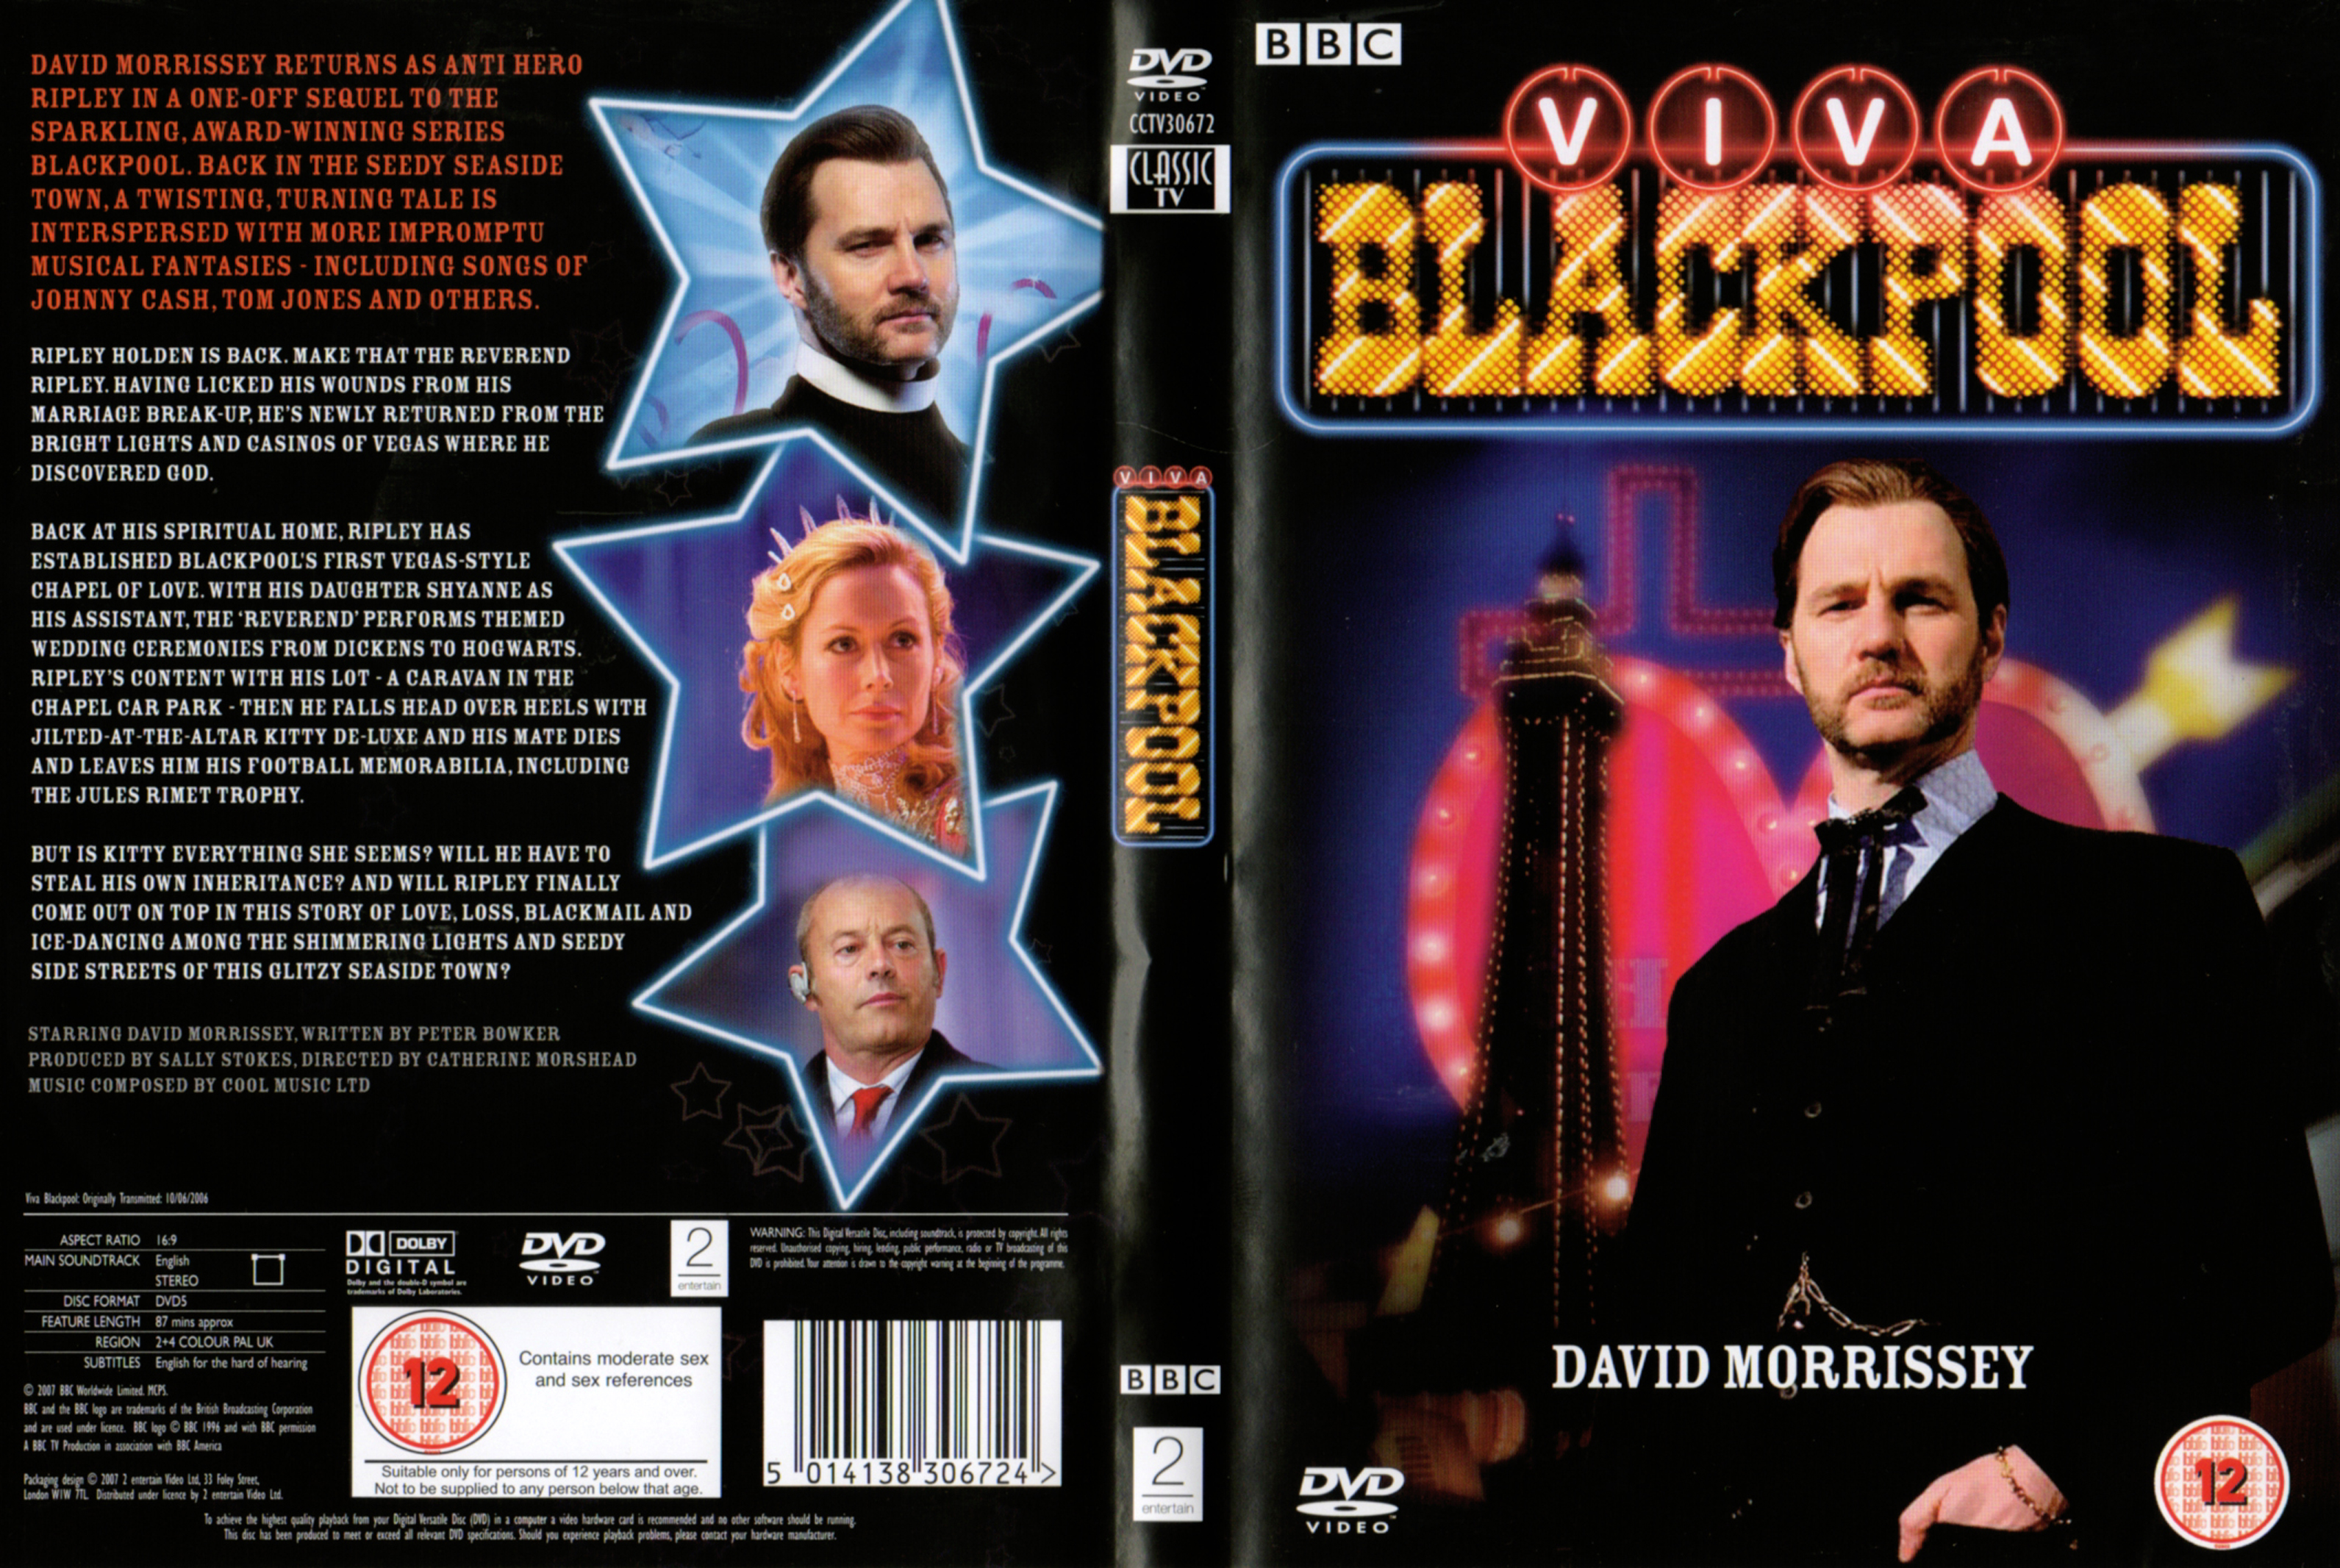 Jaquette DVD Viva Blackpool Zone 1